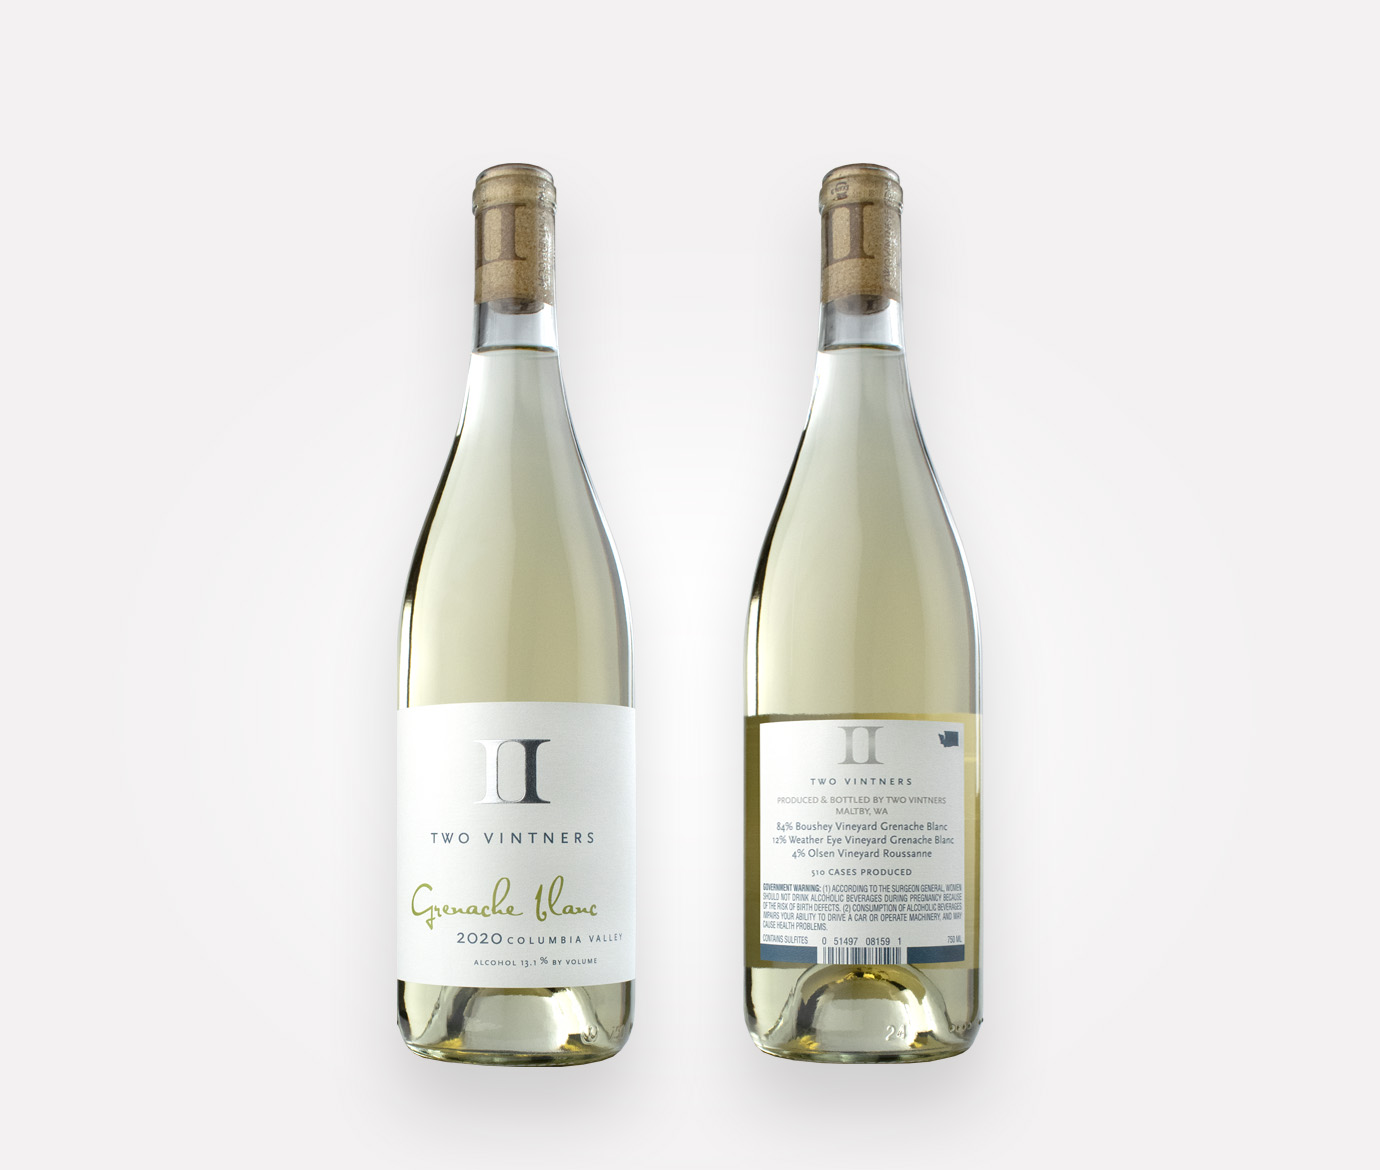 Two Vintners 2020 Grenache Blanc Washington white wine